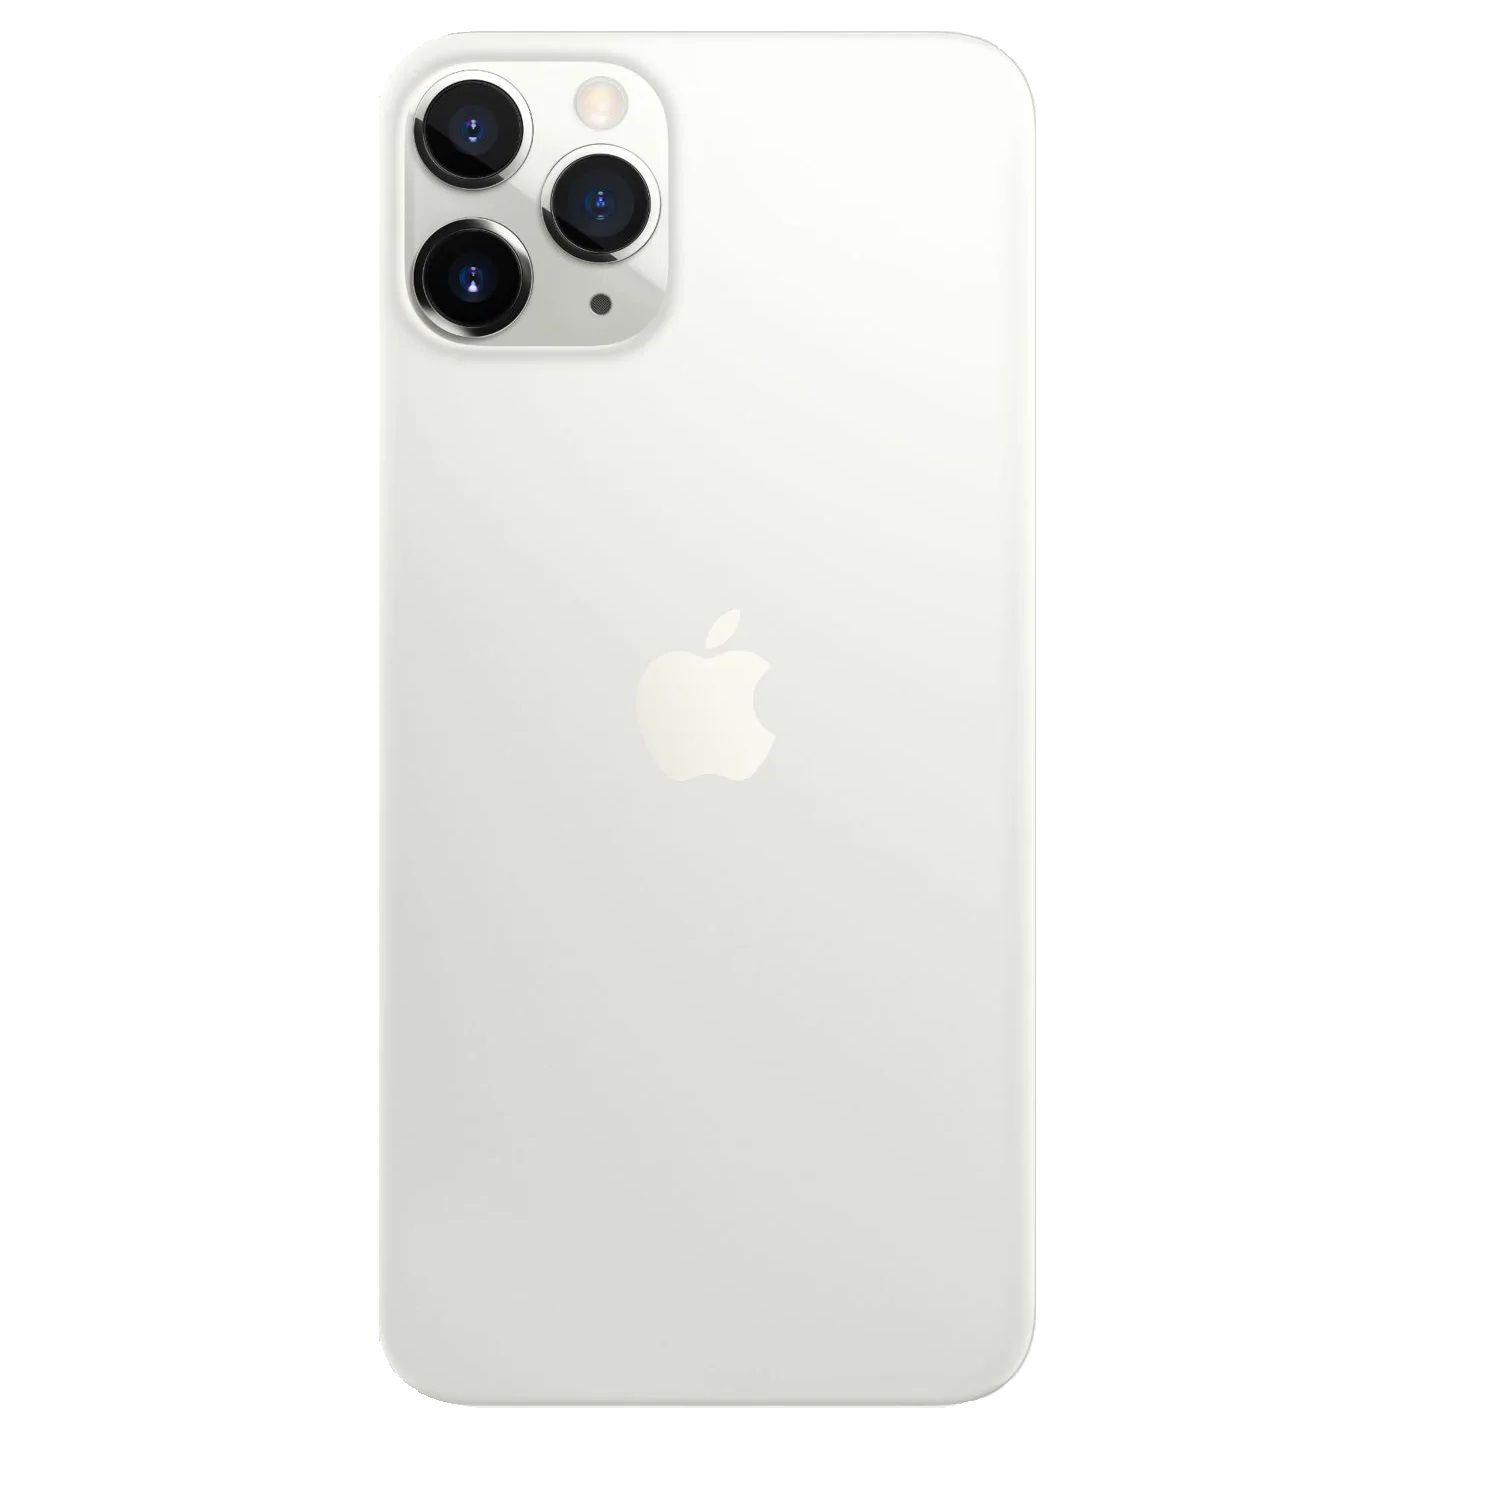 Kryt baterie iPhone 11 pro max bílý + sklíčko fotoaparátu